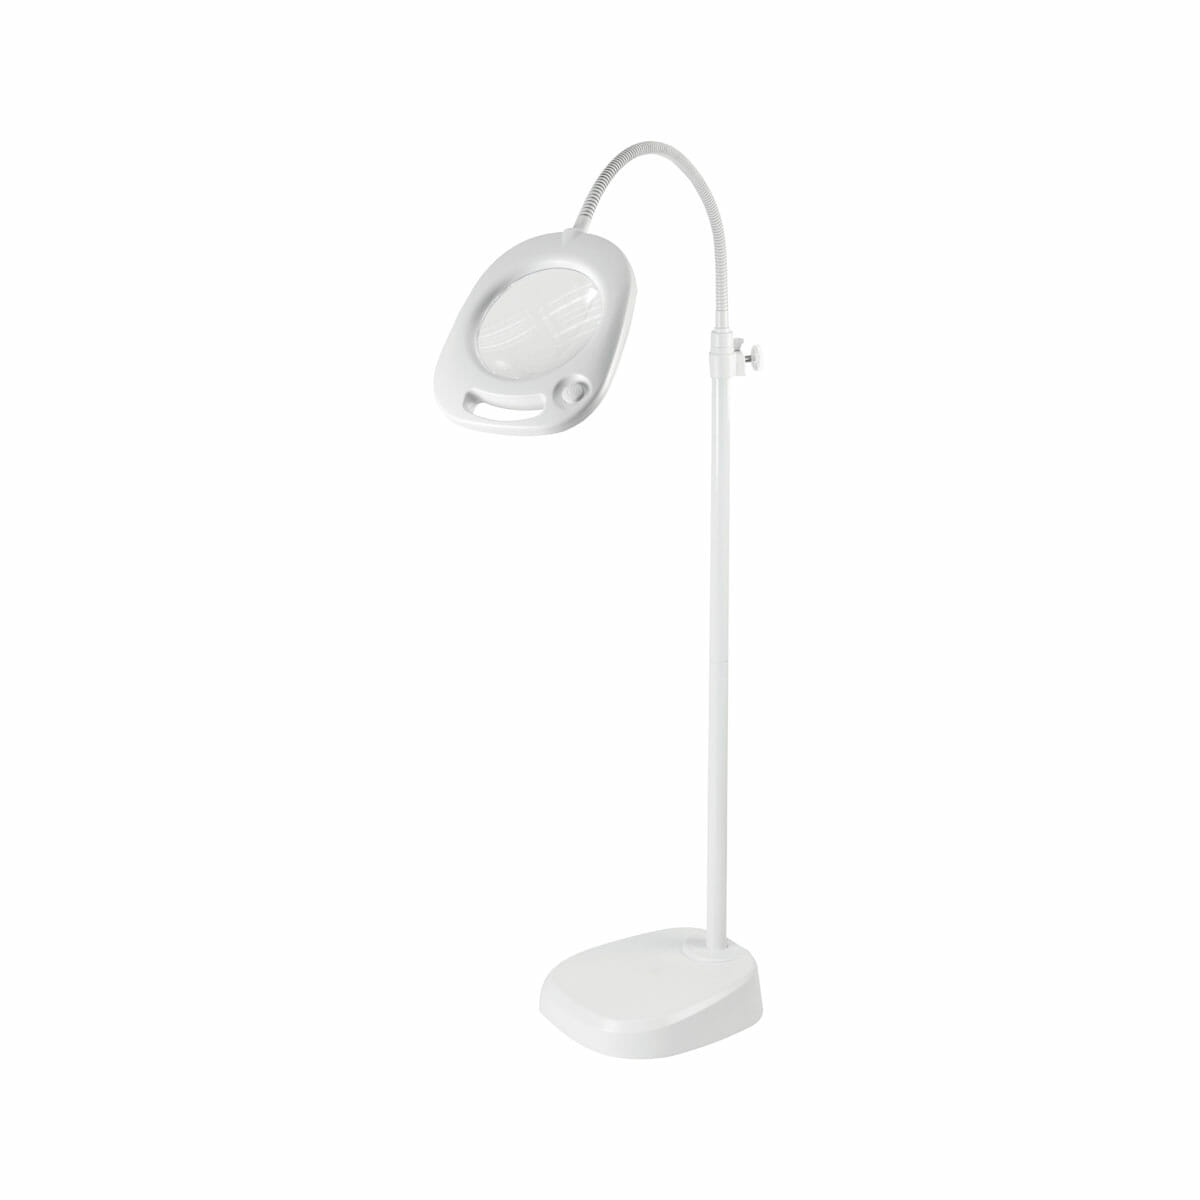 woede Controle as Loeplamp met LED 3-in-1 - PureLite - Low Vision Shop